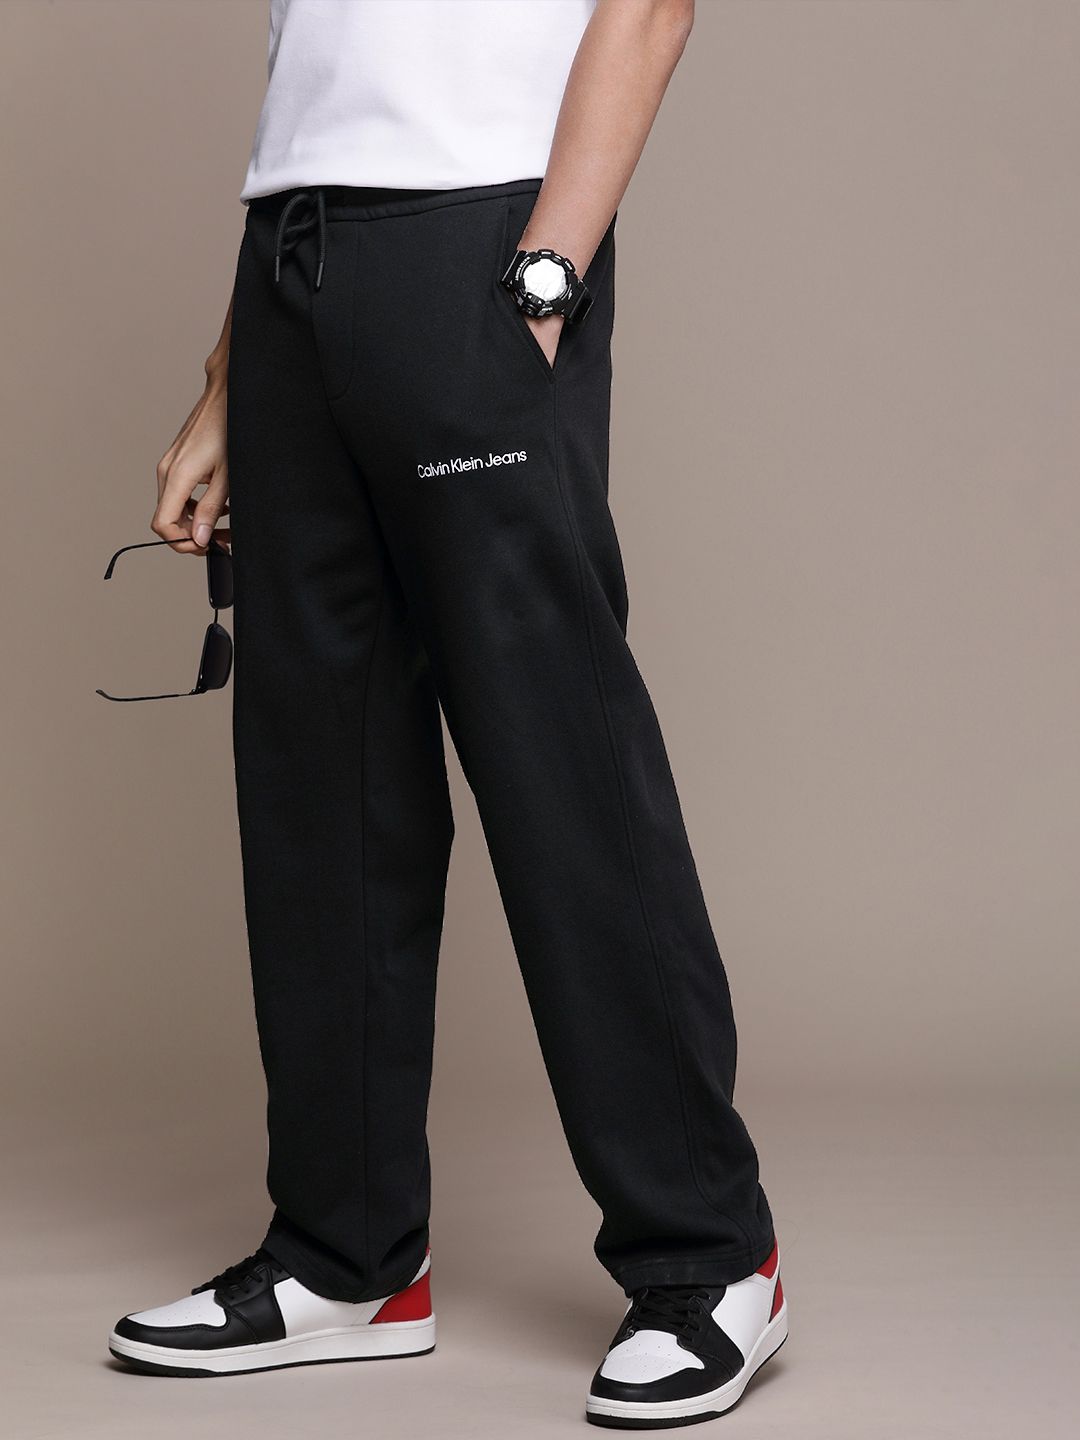 Buy White Track Pants for Men by Calvin Klein Jeans Online  Ajiocom